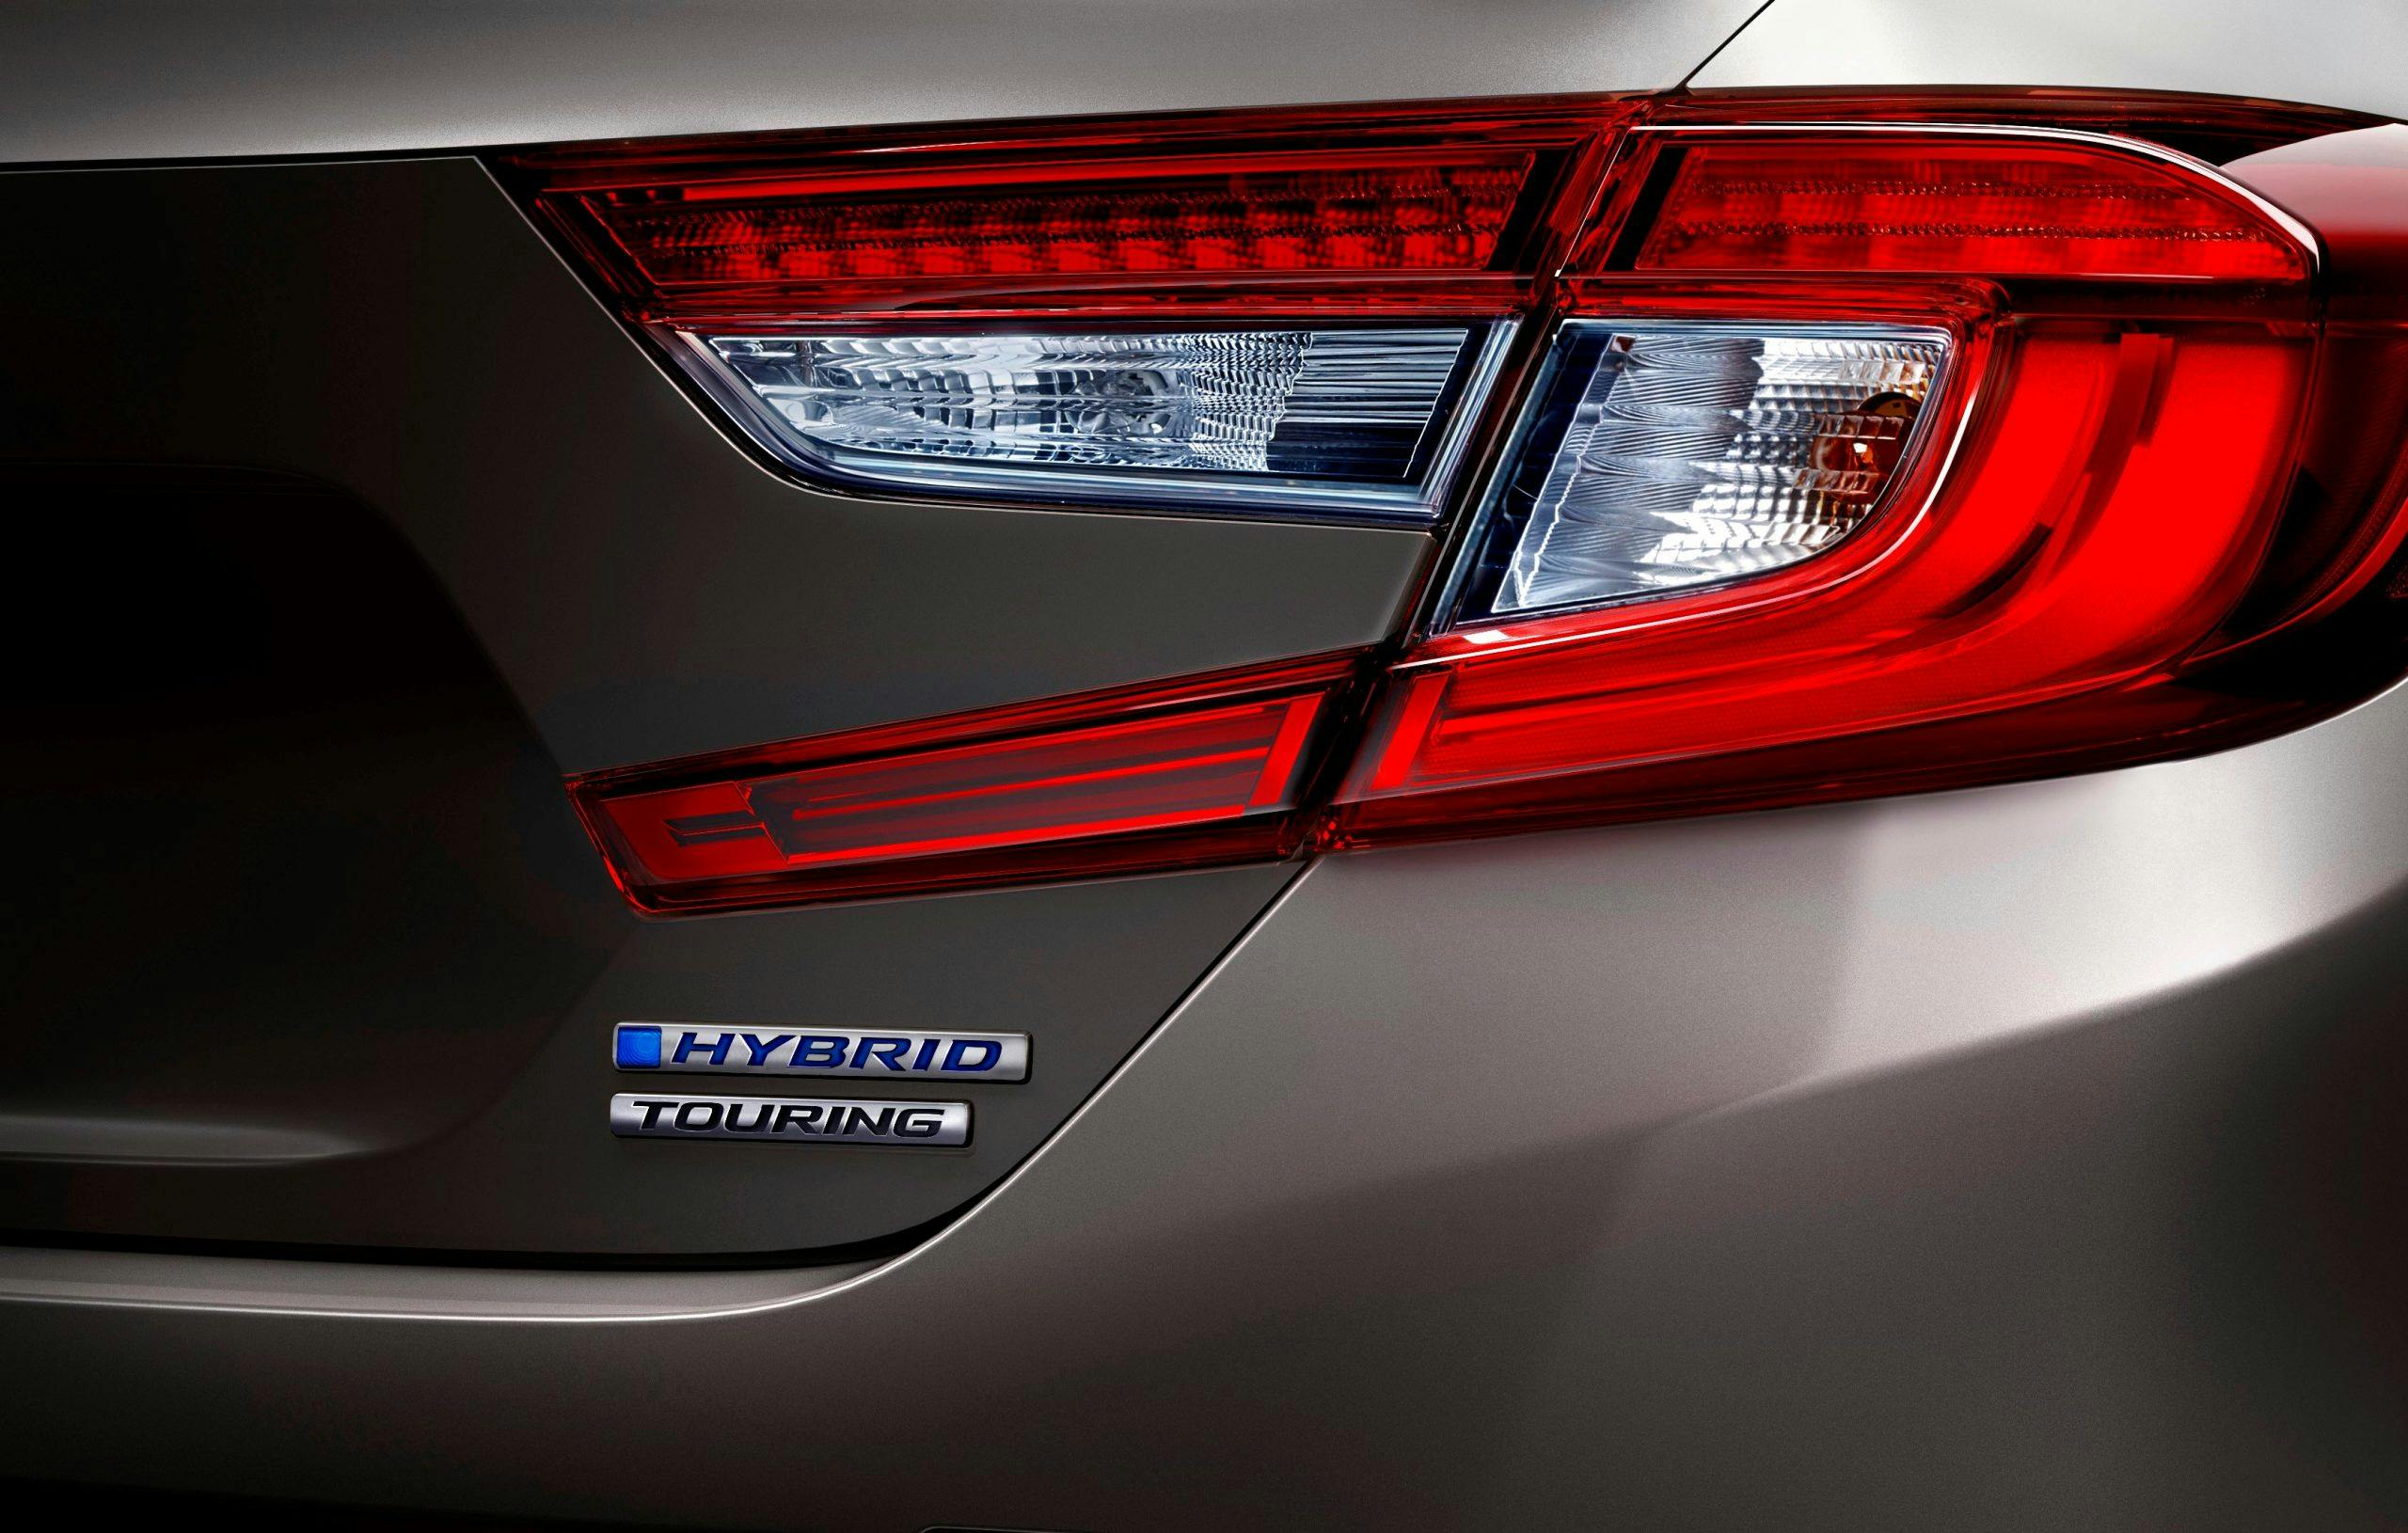 Honda Accord Hybrid Touring rear taillamp and trunk badging